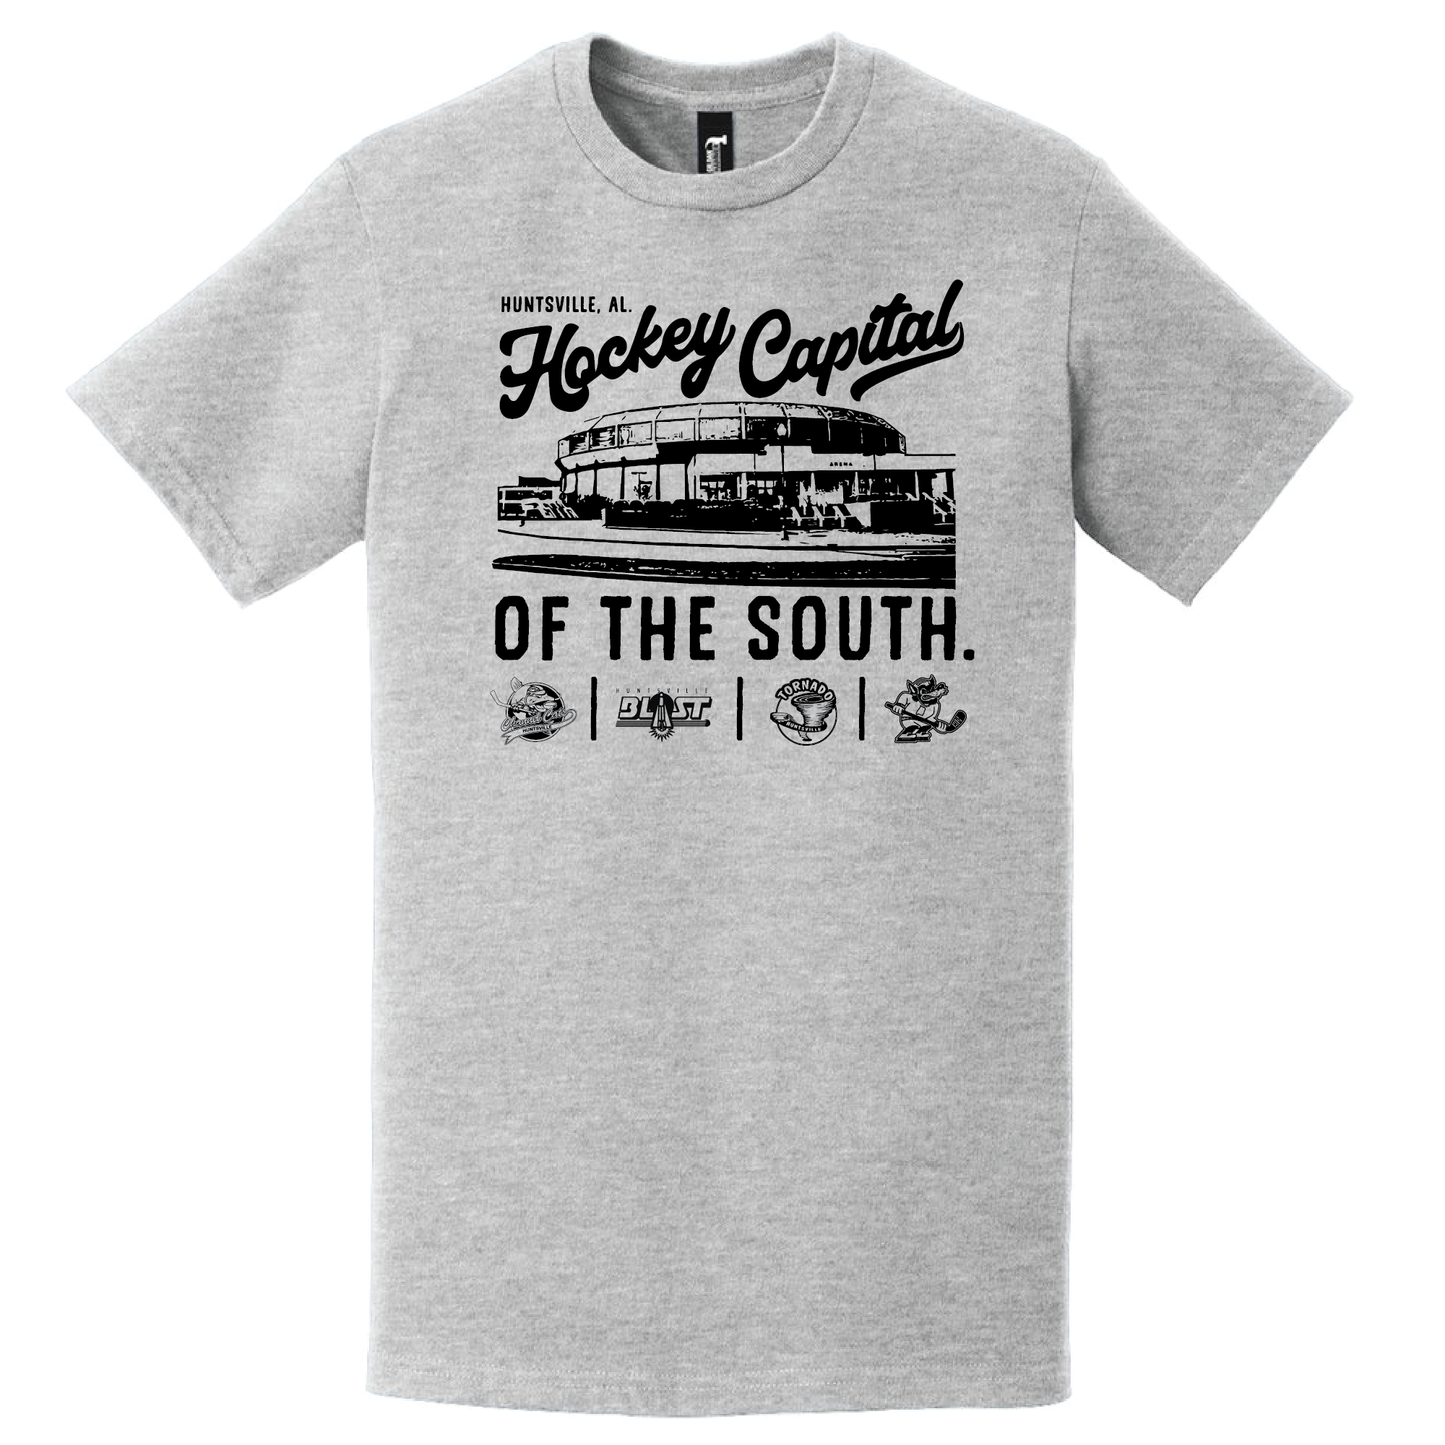 Hockey Capital of the South T-Shirt